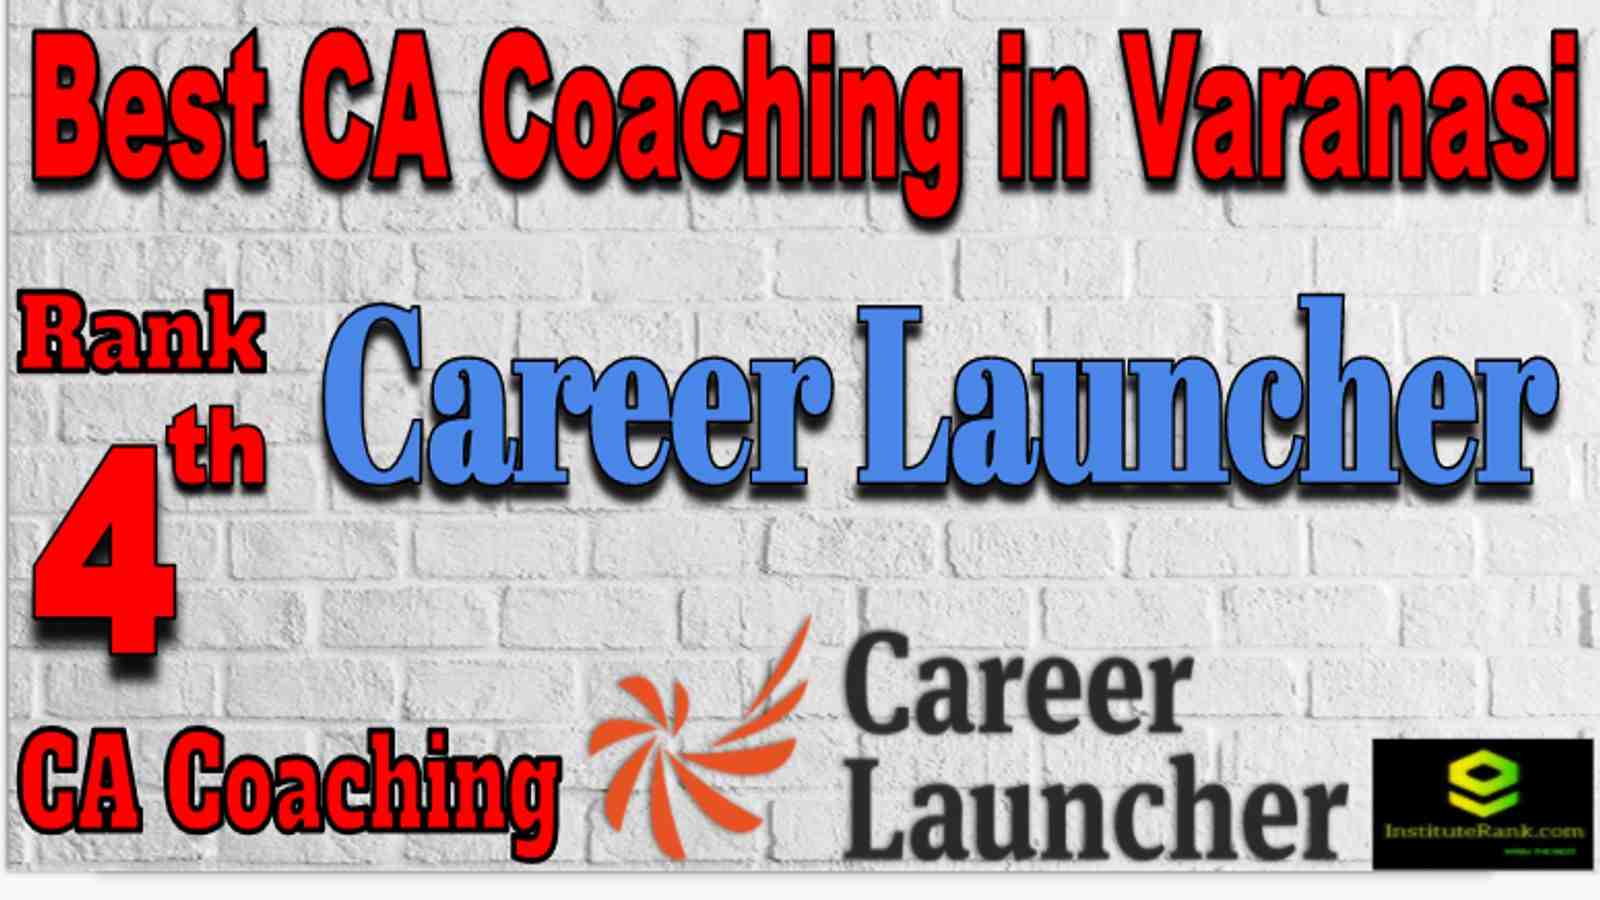 Rank 4 Best CA Coaching in Varanasi